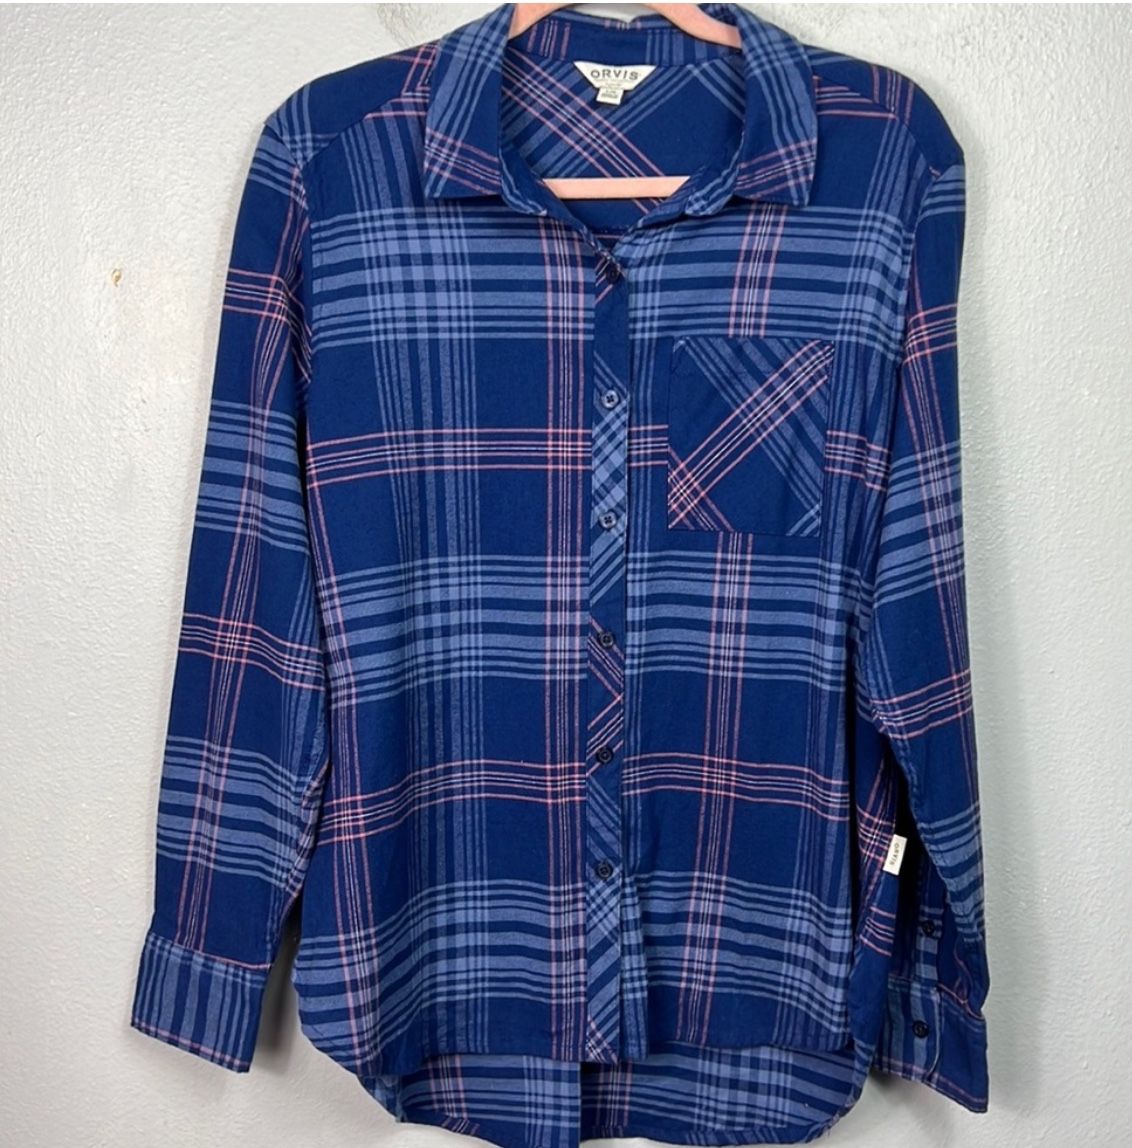 Women’s Orvis Plaid Flannel Shirt Size Medium